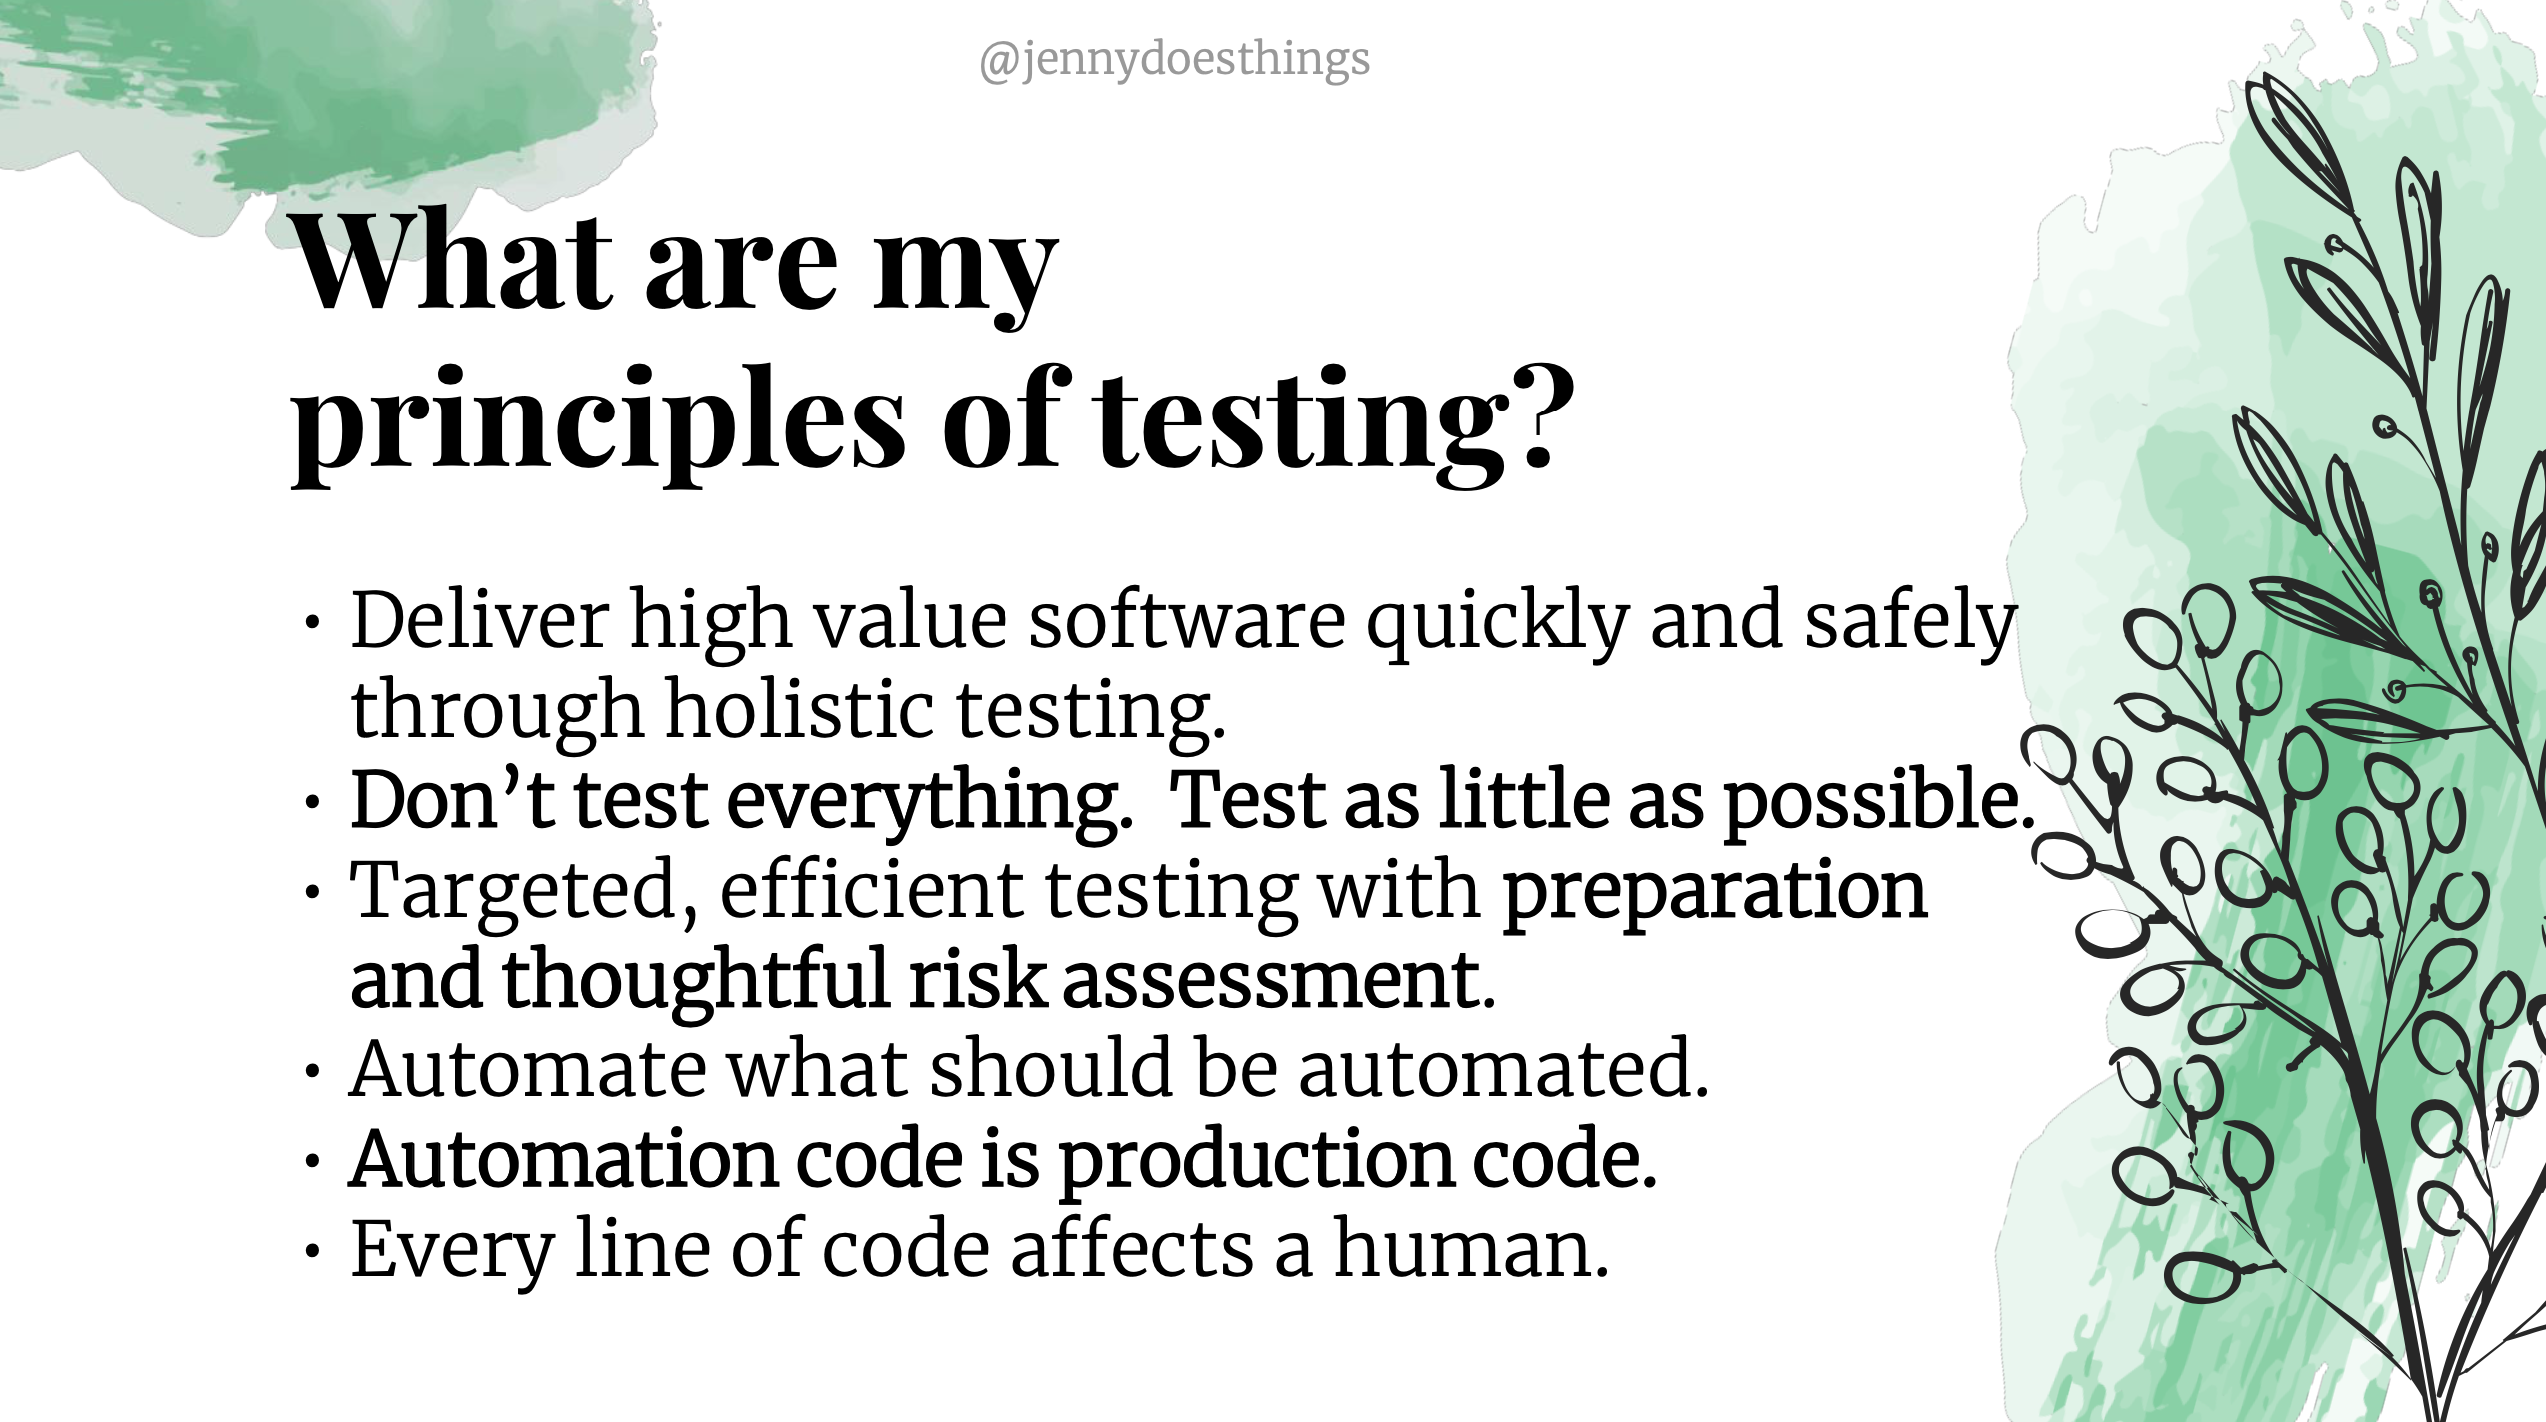 Figure 5: Jenny’s Principles of Testing